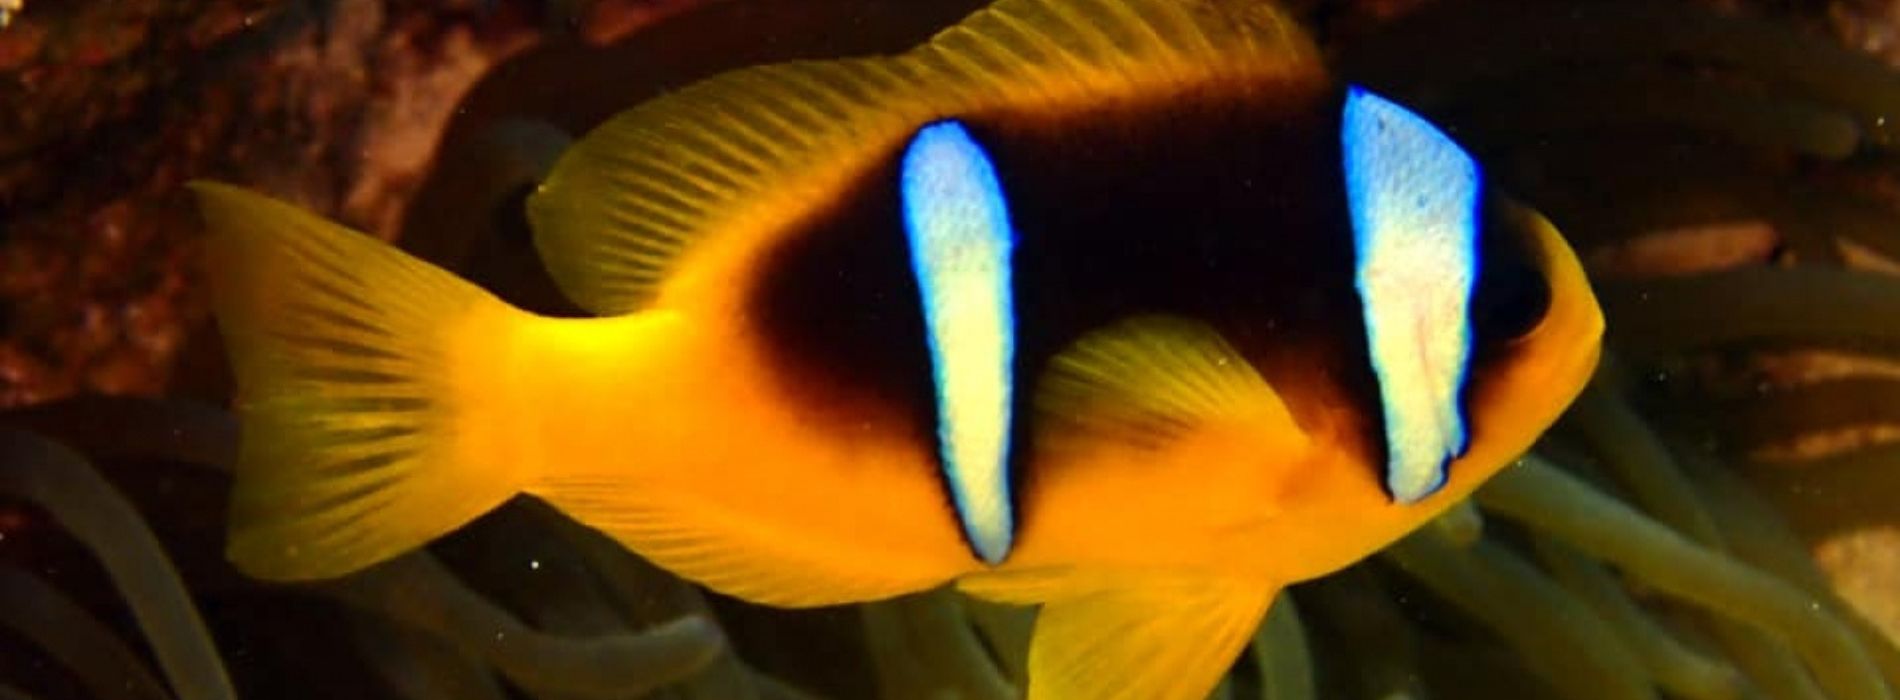 Red-Sea-clownfish